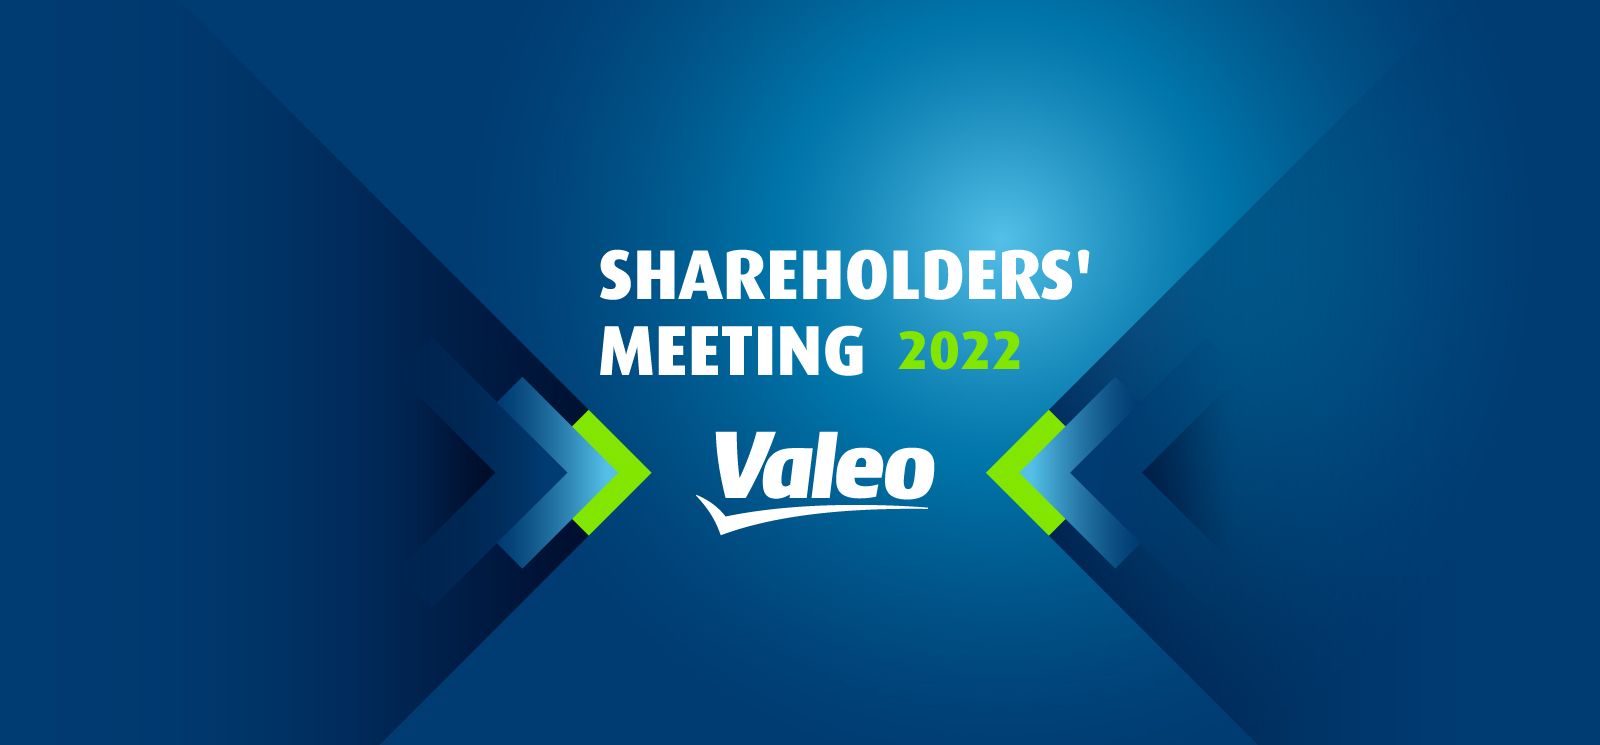 Shareholders' meeting